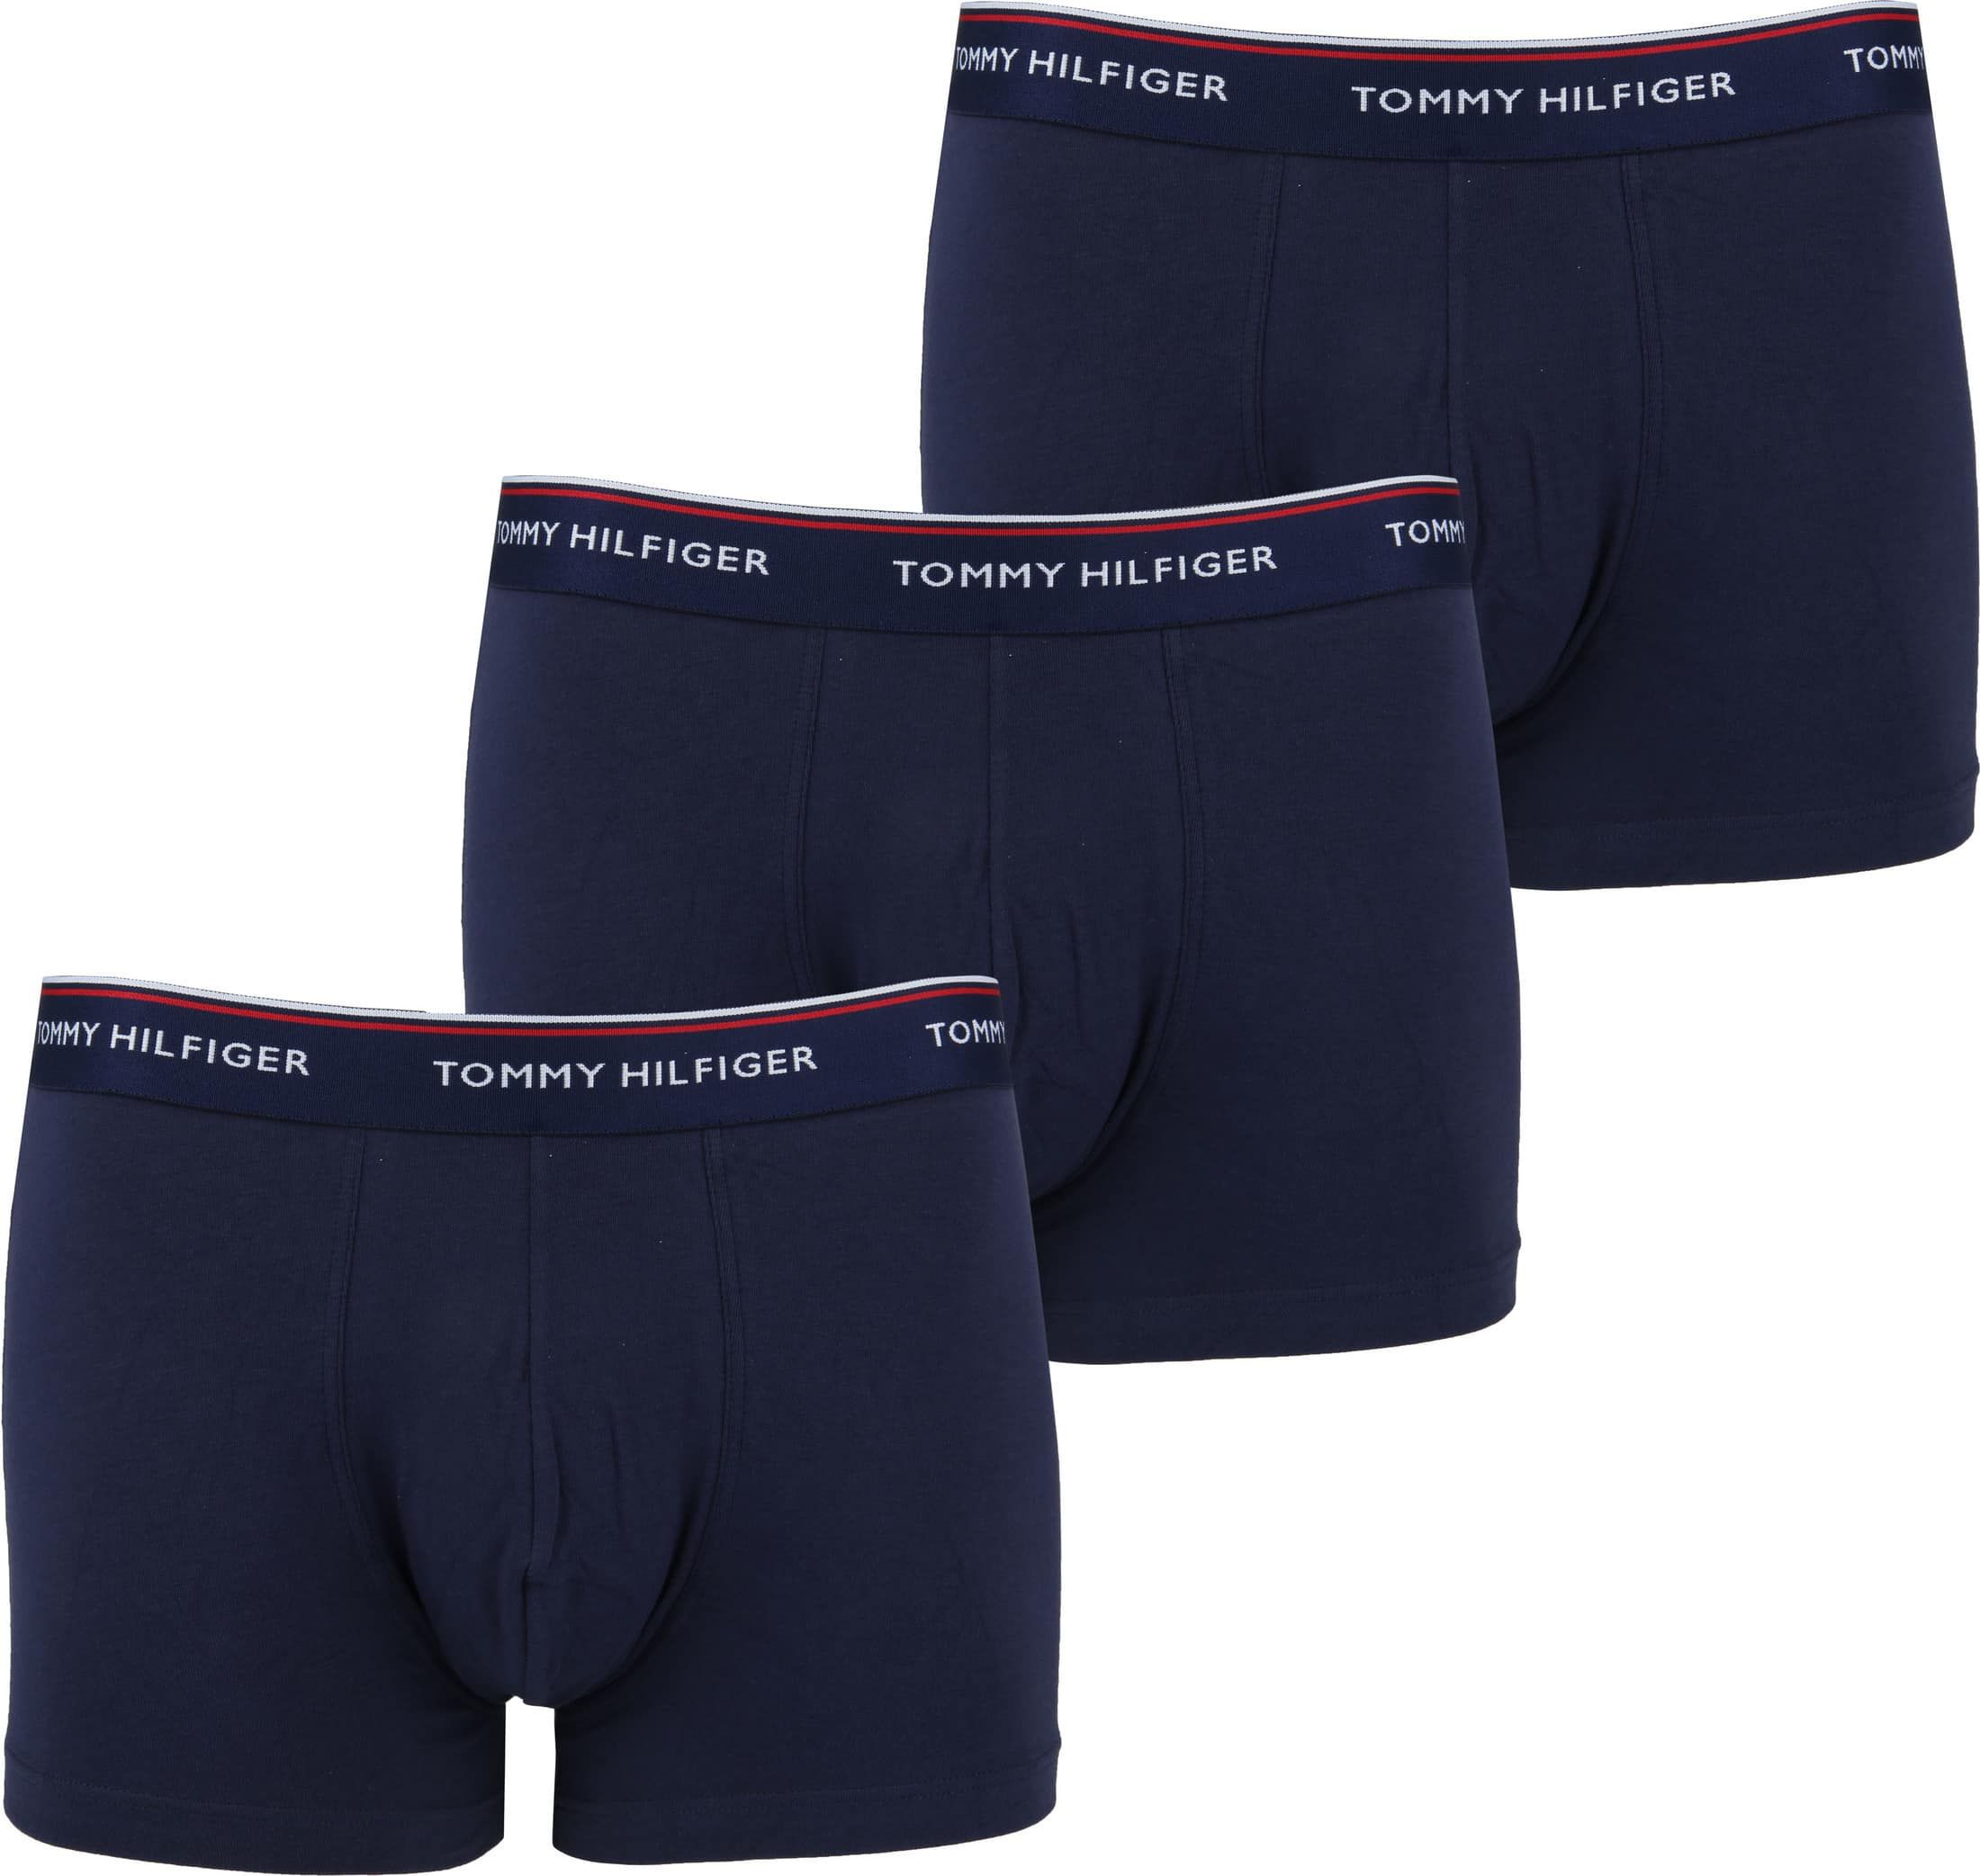 Tommy Hilfiger Boxershorts 3-Pack Trunk Dark Dark Blue Blue size L